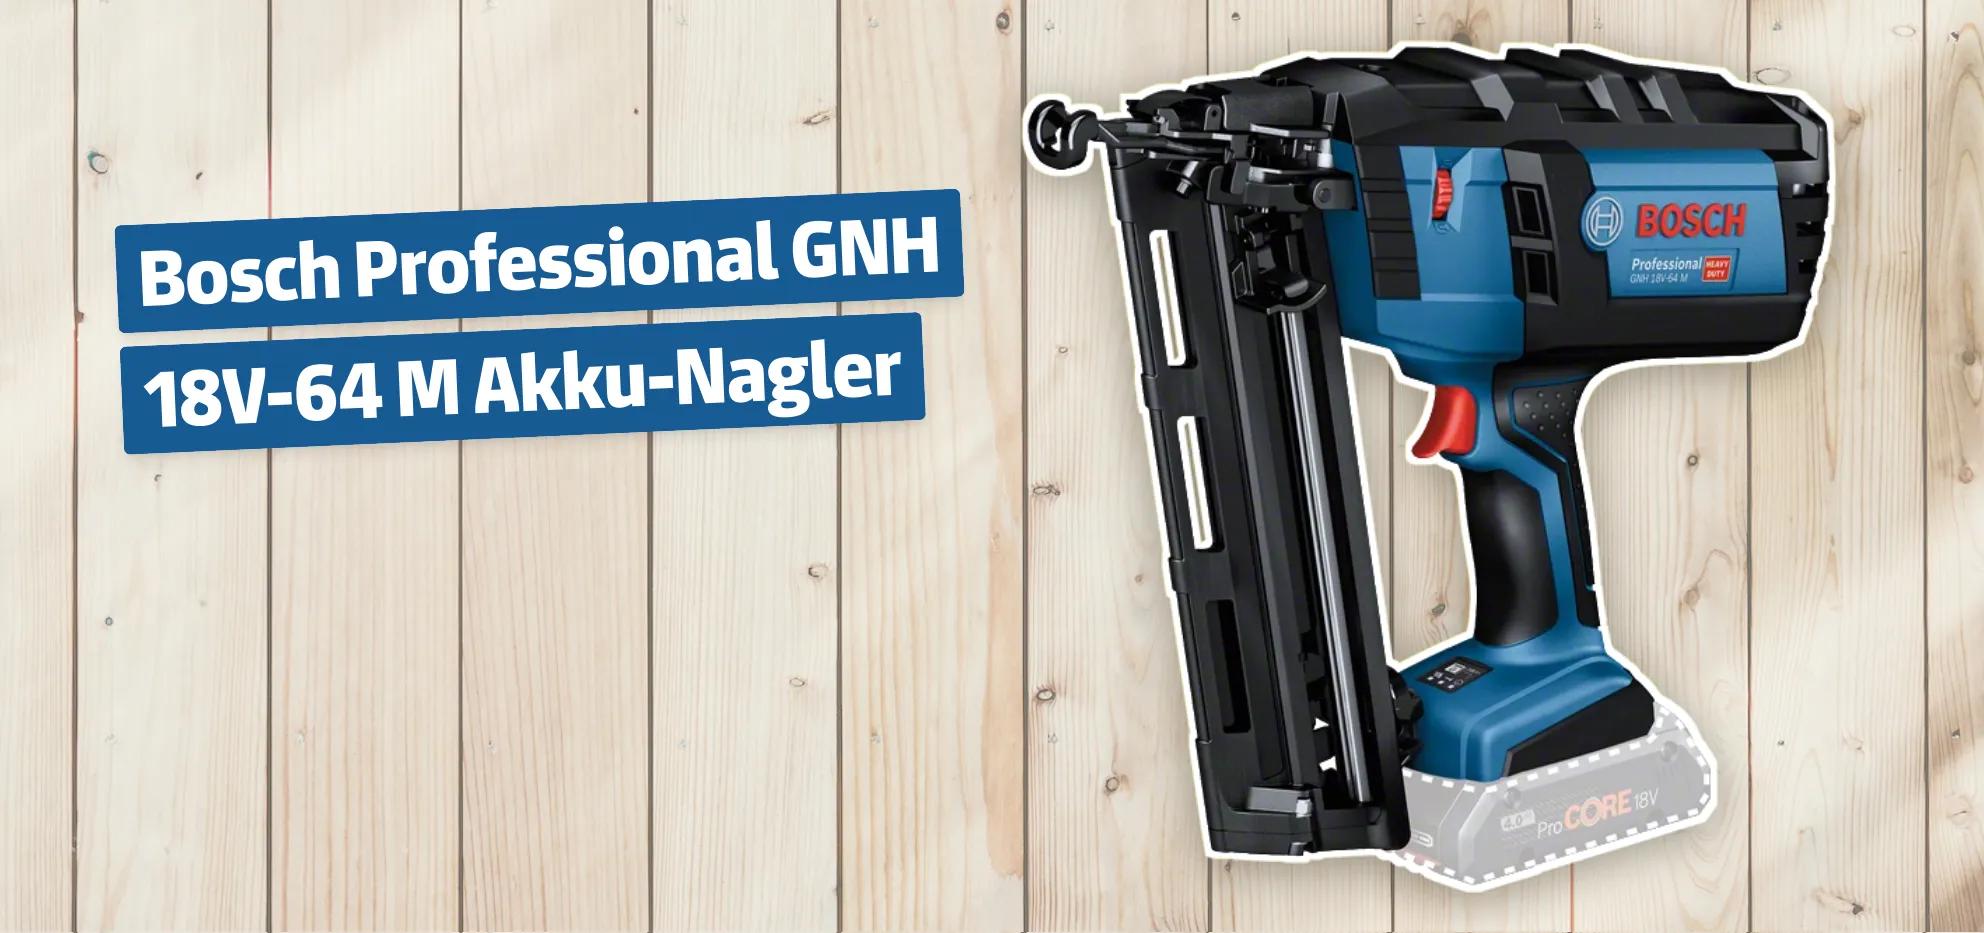 Bosch Professional GNH 18V-64 M Akku-Nagler